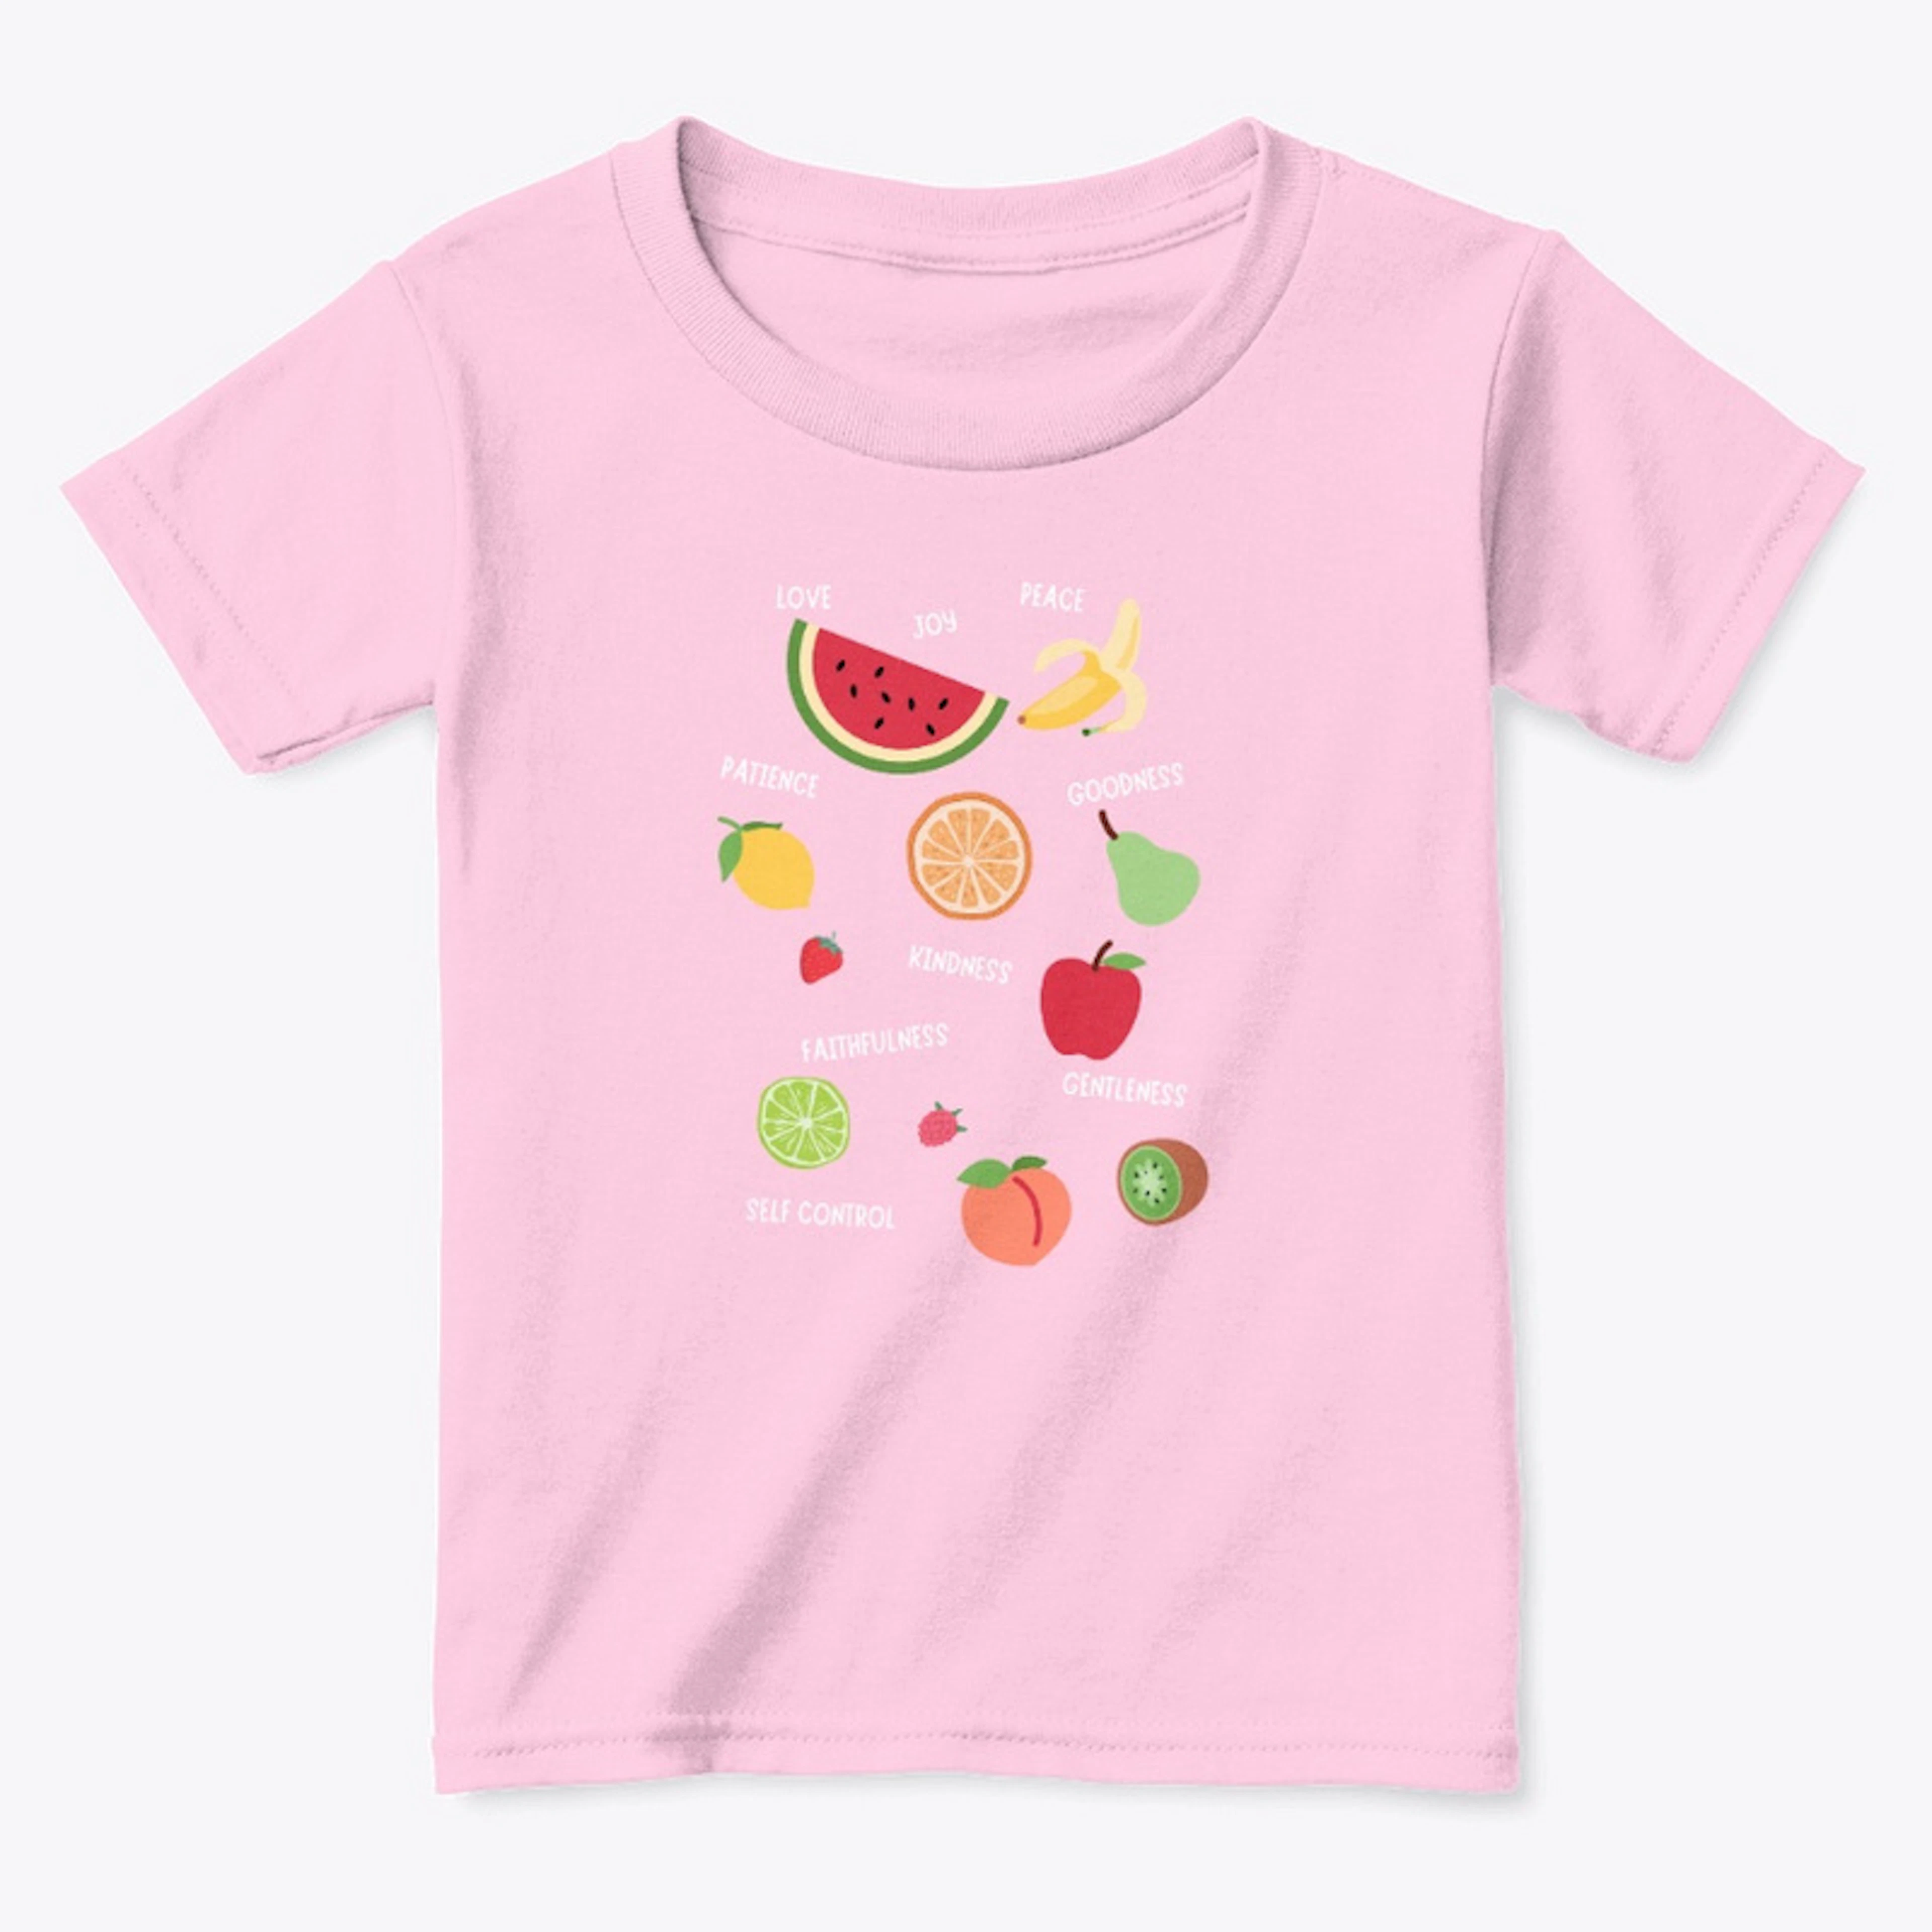 Fruit of the Holy Spirit Toddler T-shirt